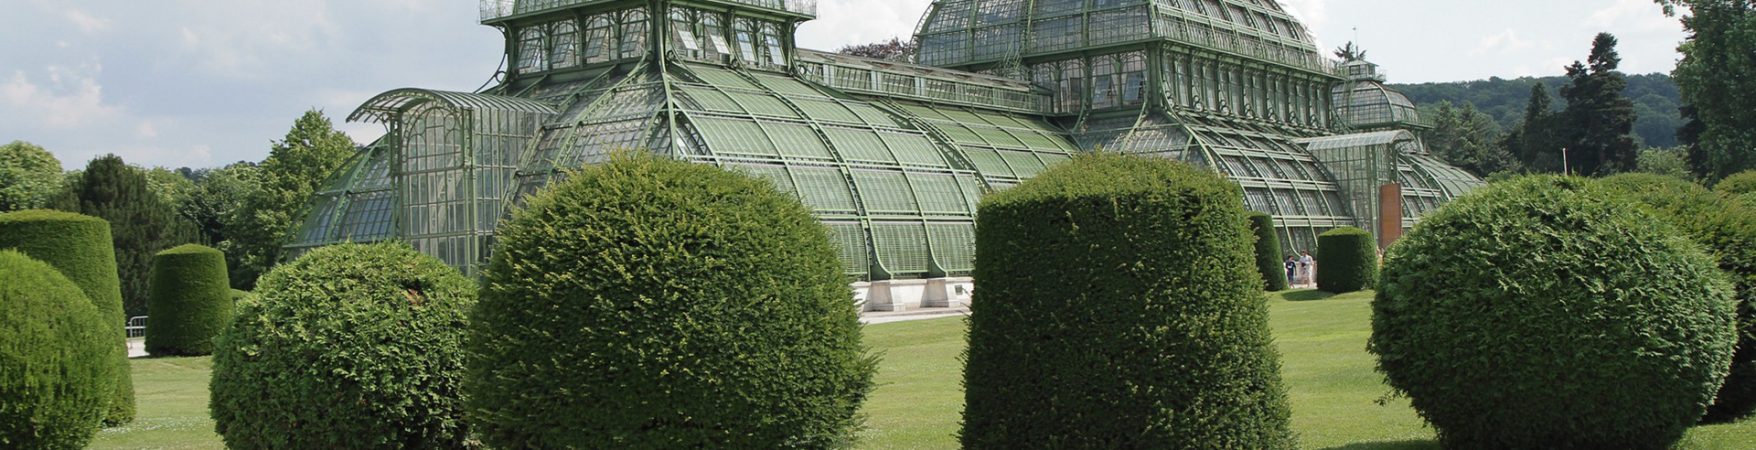 jardin botanique espace vert